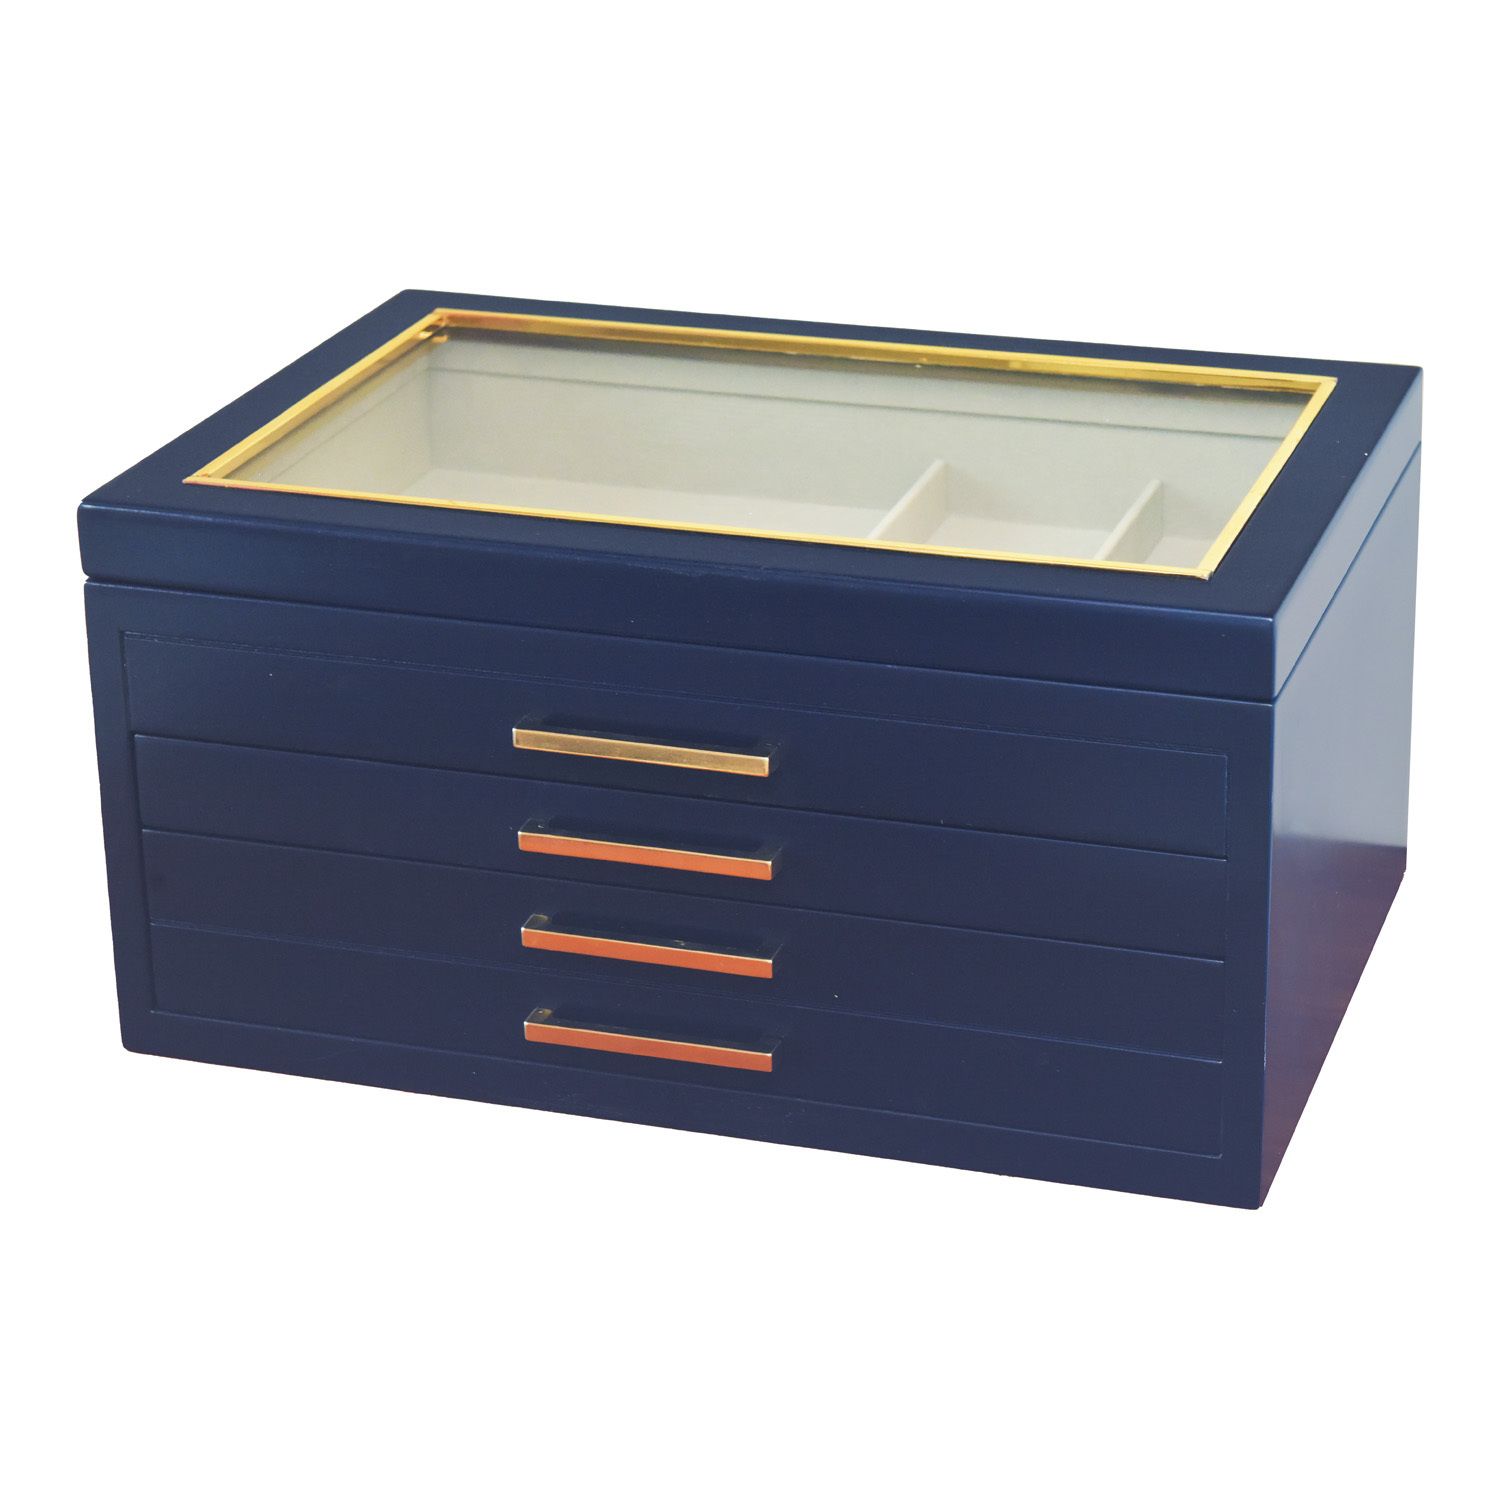 Mdesign Plastic Jewelry Box, 4 Removable Storage Organizer Trays